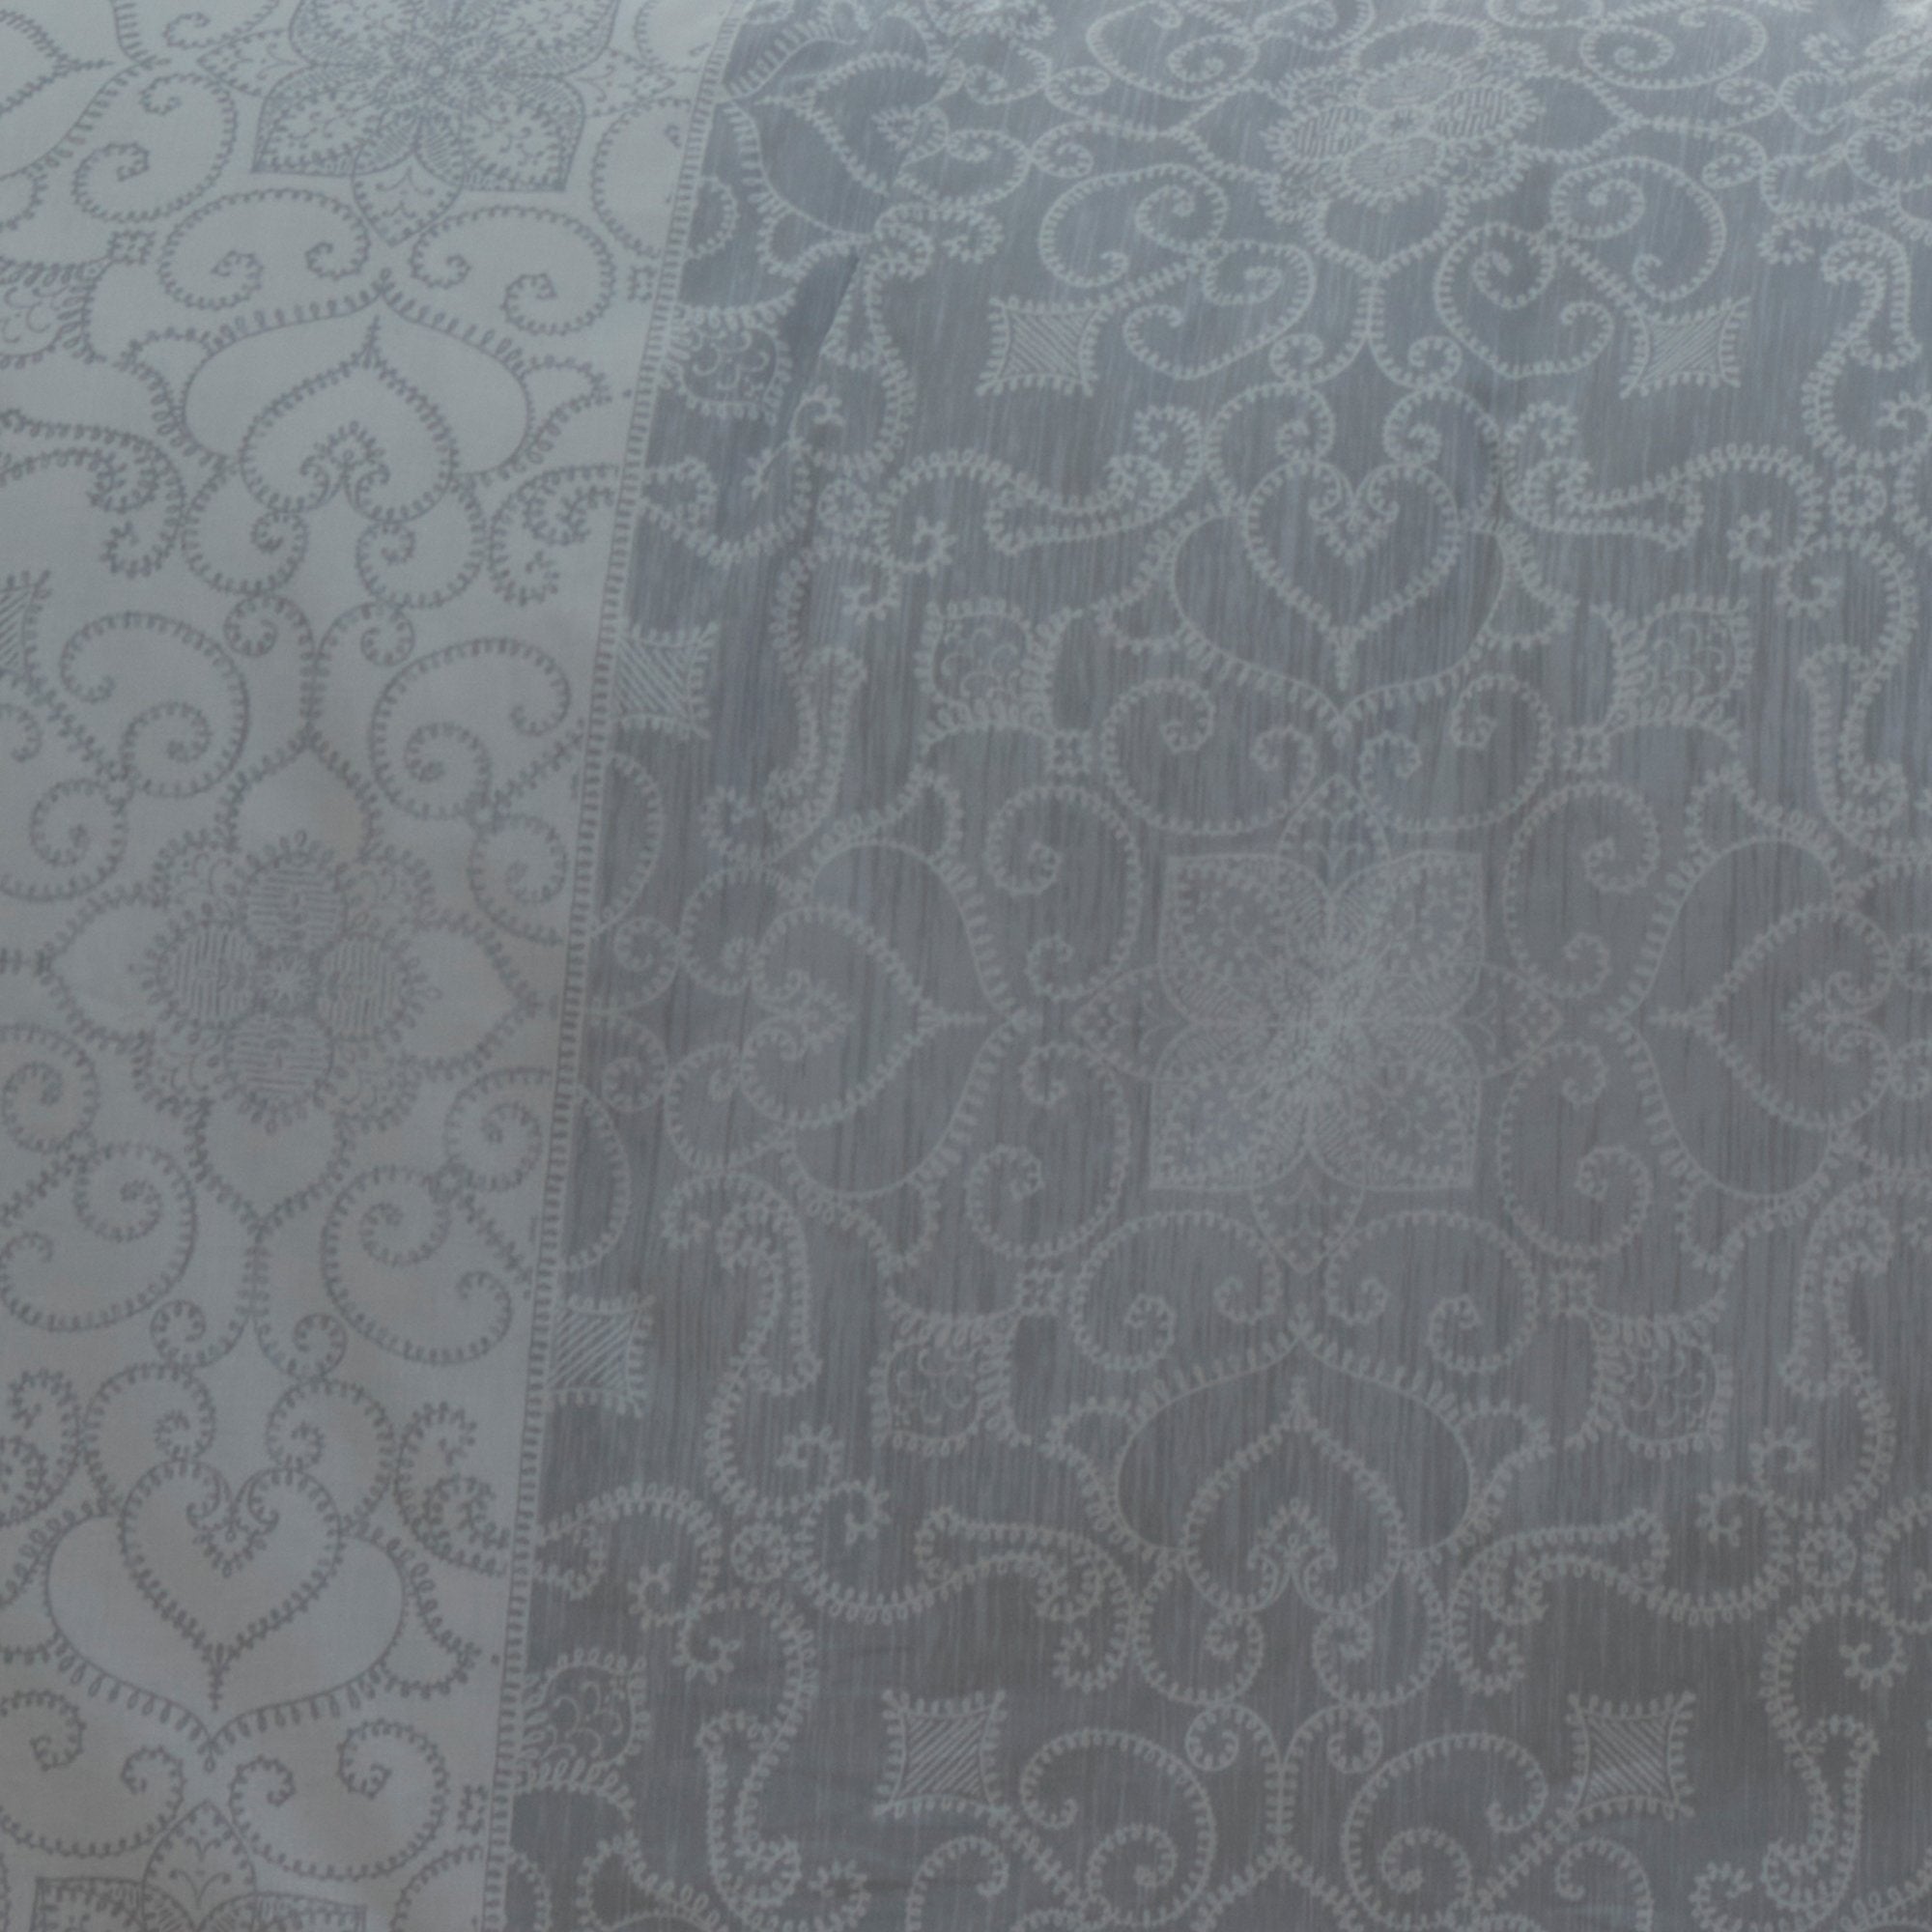 Duvet Cover Set Frampton by Dreams & Drapes Design in Grey